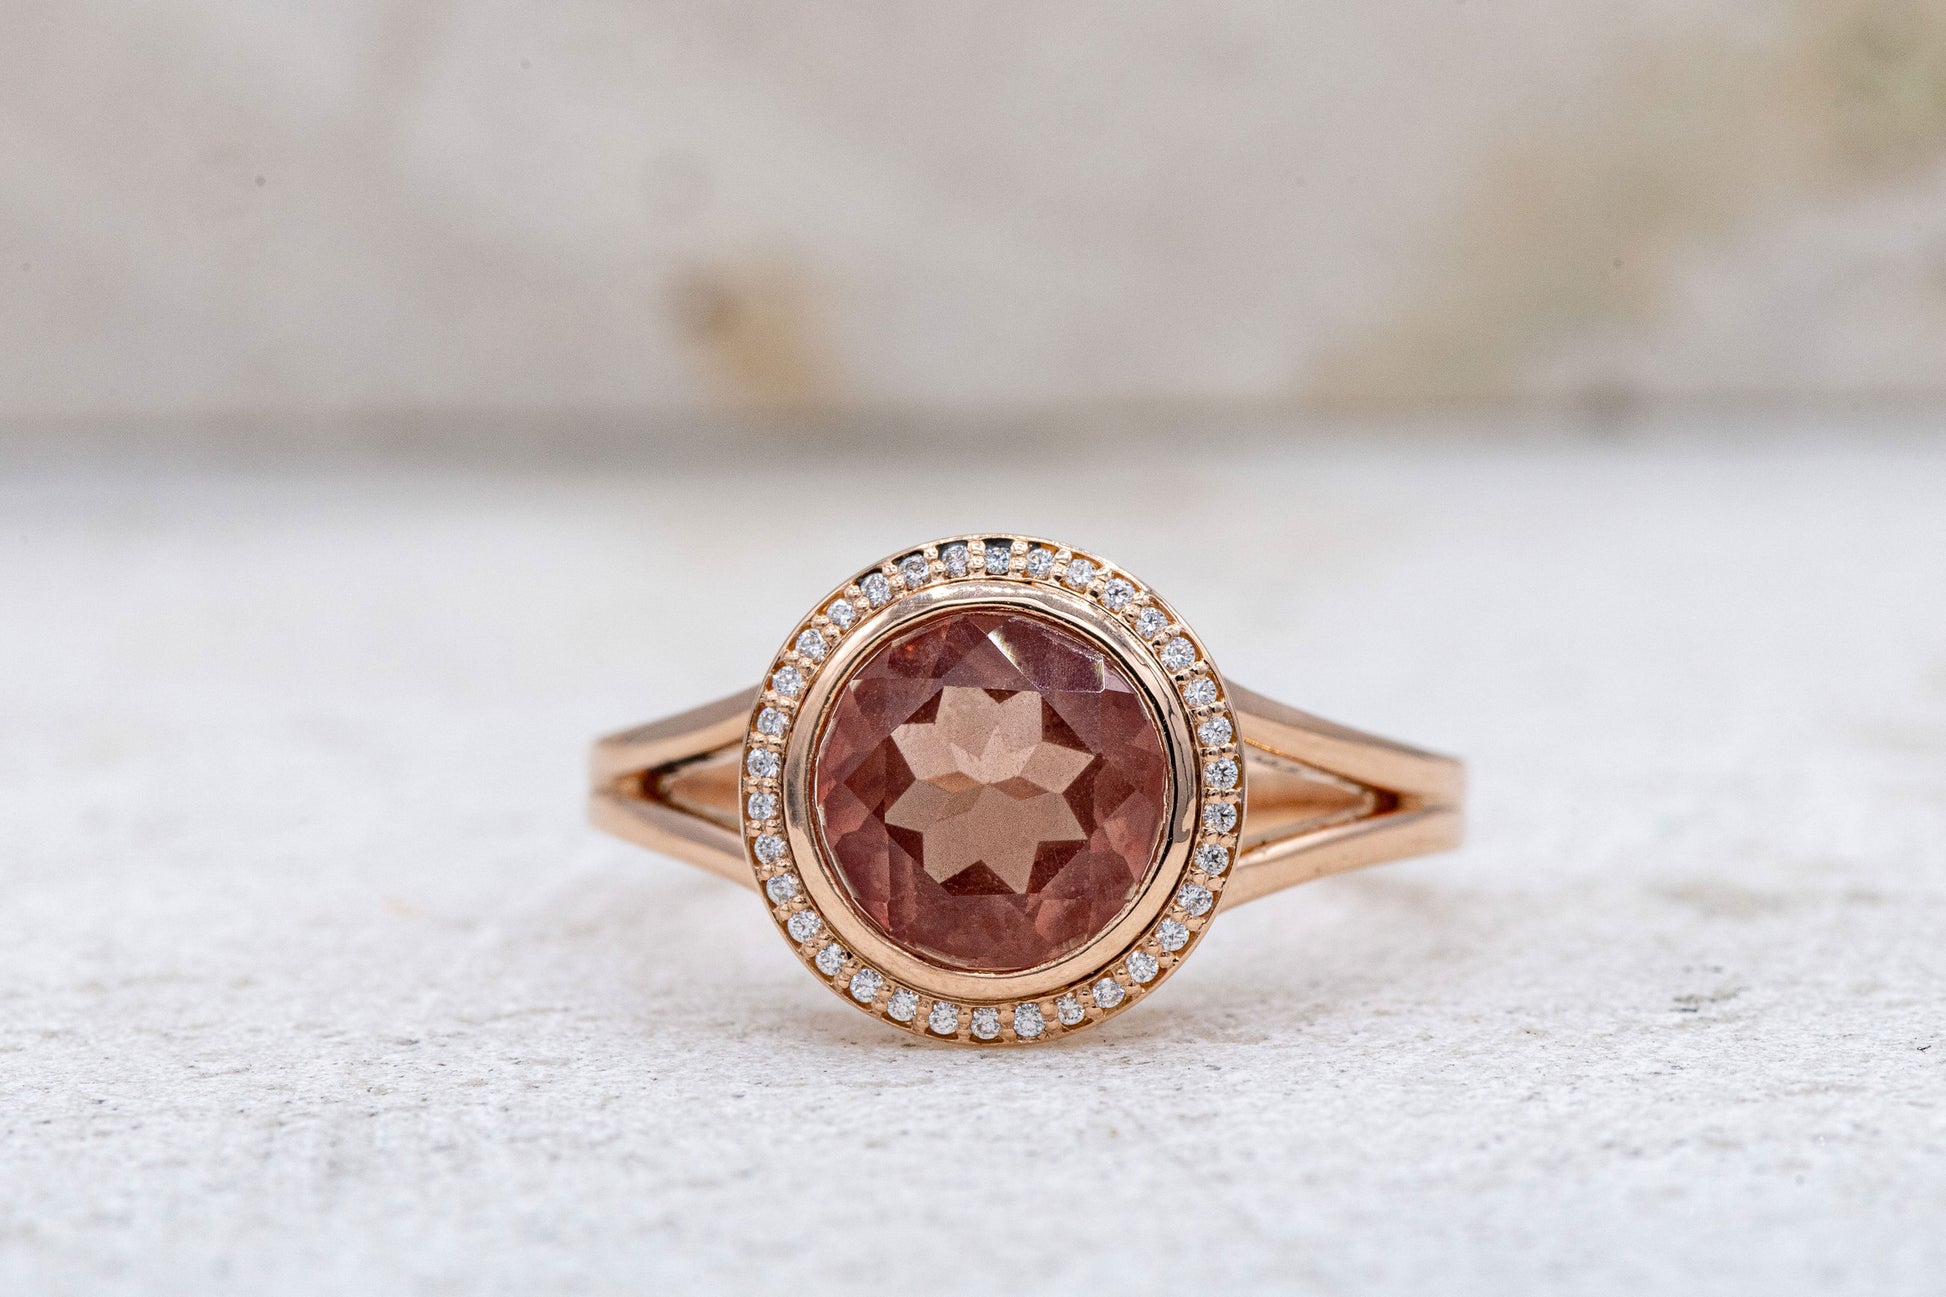 A Cassin handmade Oregon Sunstone Diamond Halo Ring with a morganite stone and diamonds.